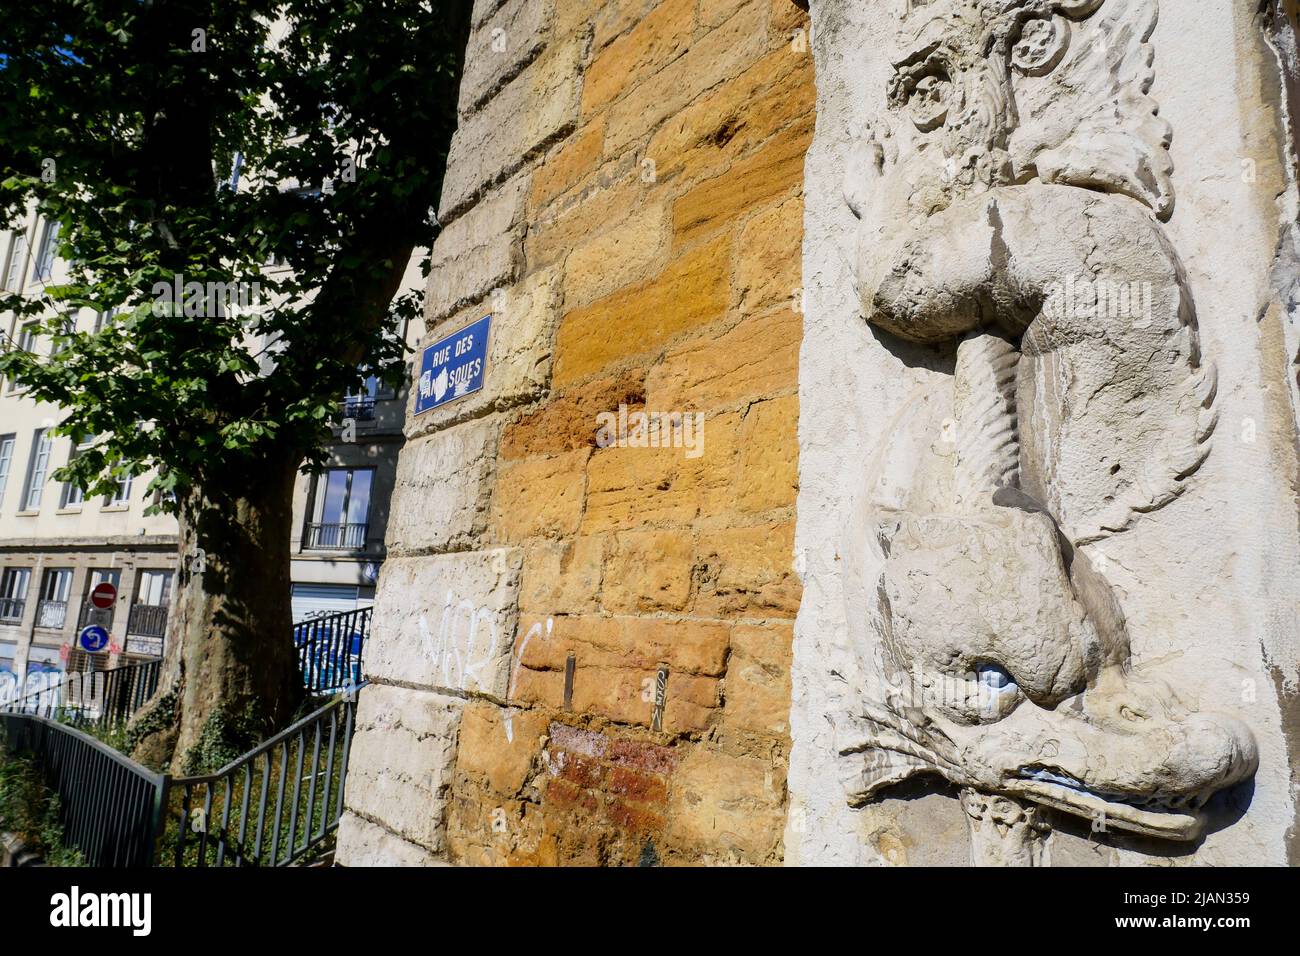 Bas-relief, Fantasques street, Croix-Rousse district, Lyon, Auvergne Rhone-Alps region, Central-Eastern France Stock Photo